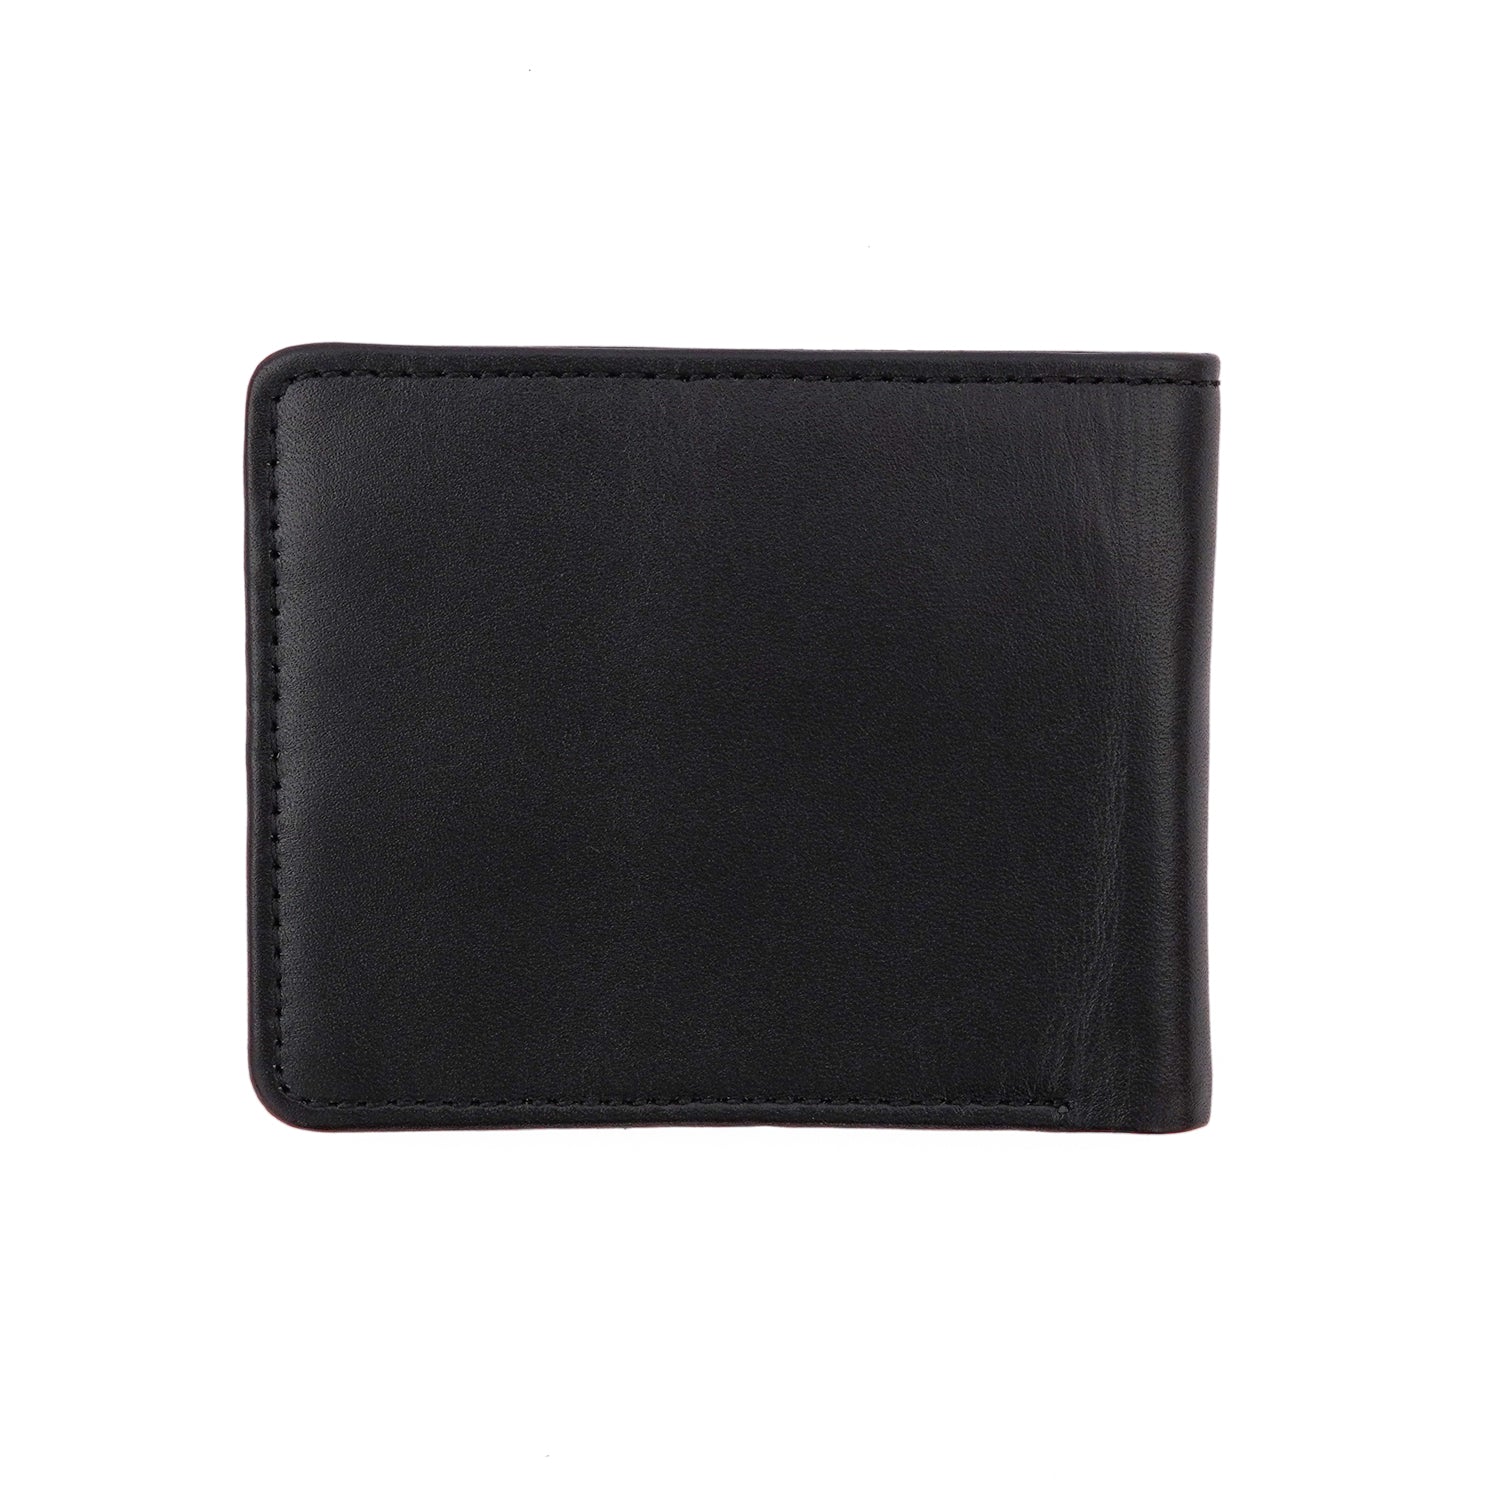 Jordan Wallet – Black